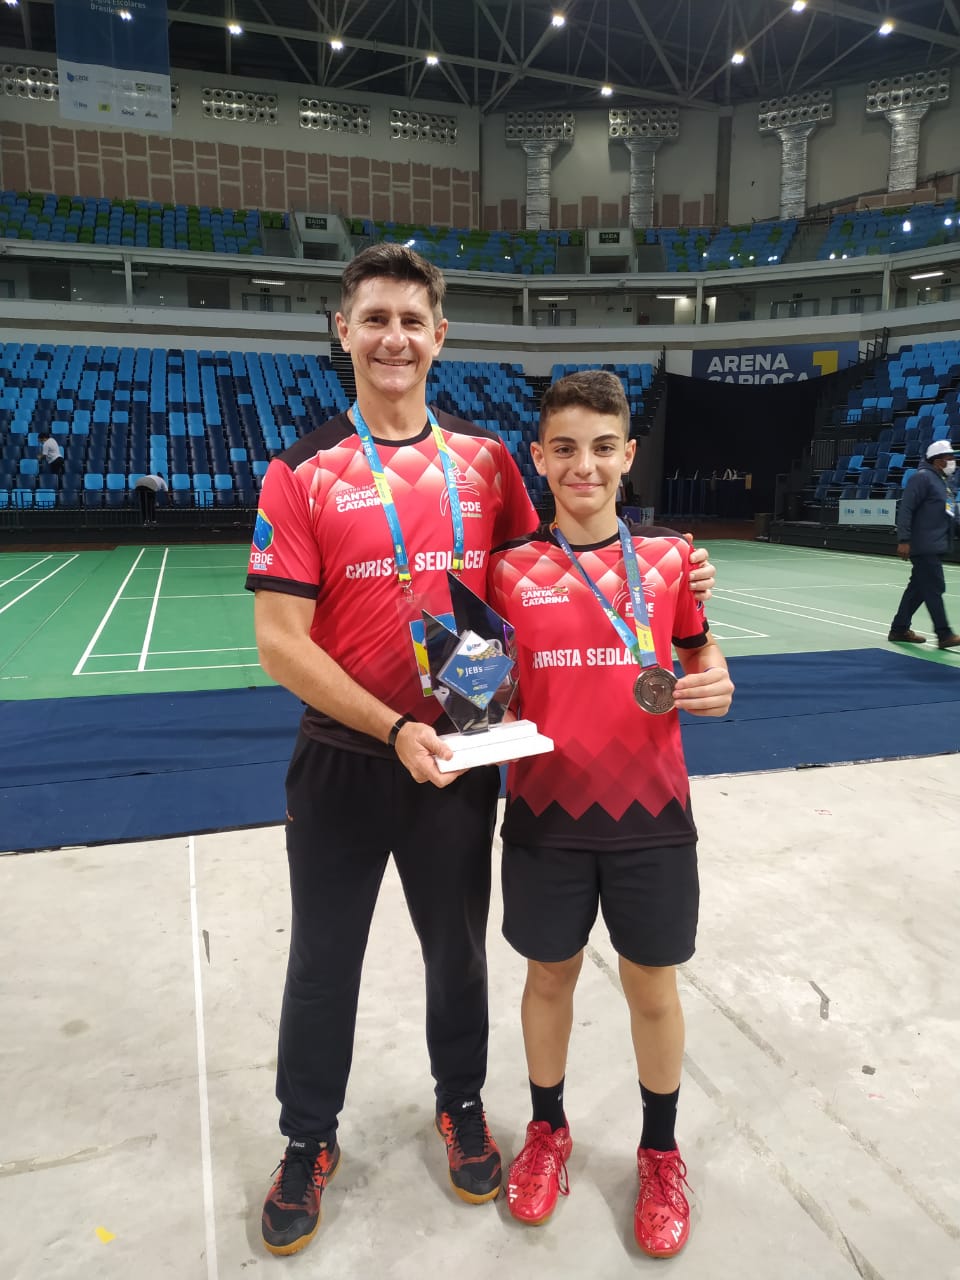 Notícia - Atleta de badminton da Udesc Alto Vale recebe medalha nos Jogos  Escolares Brasileiros